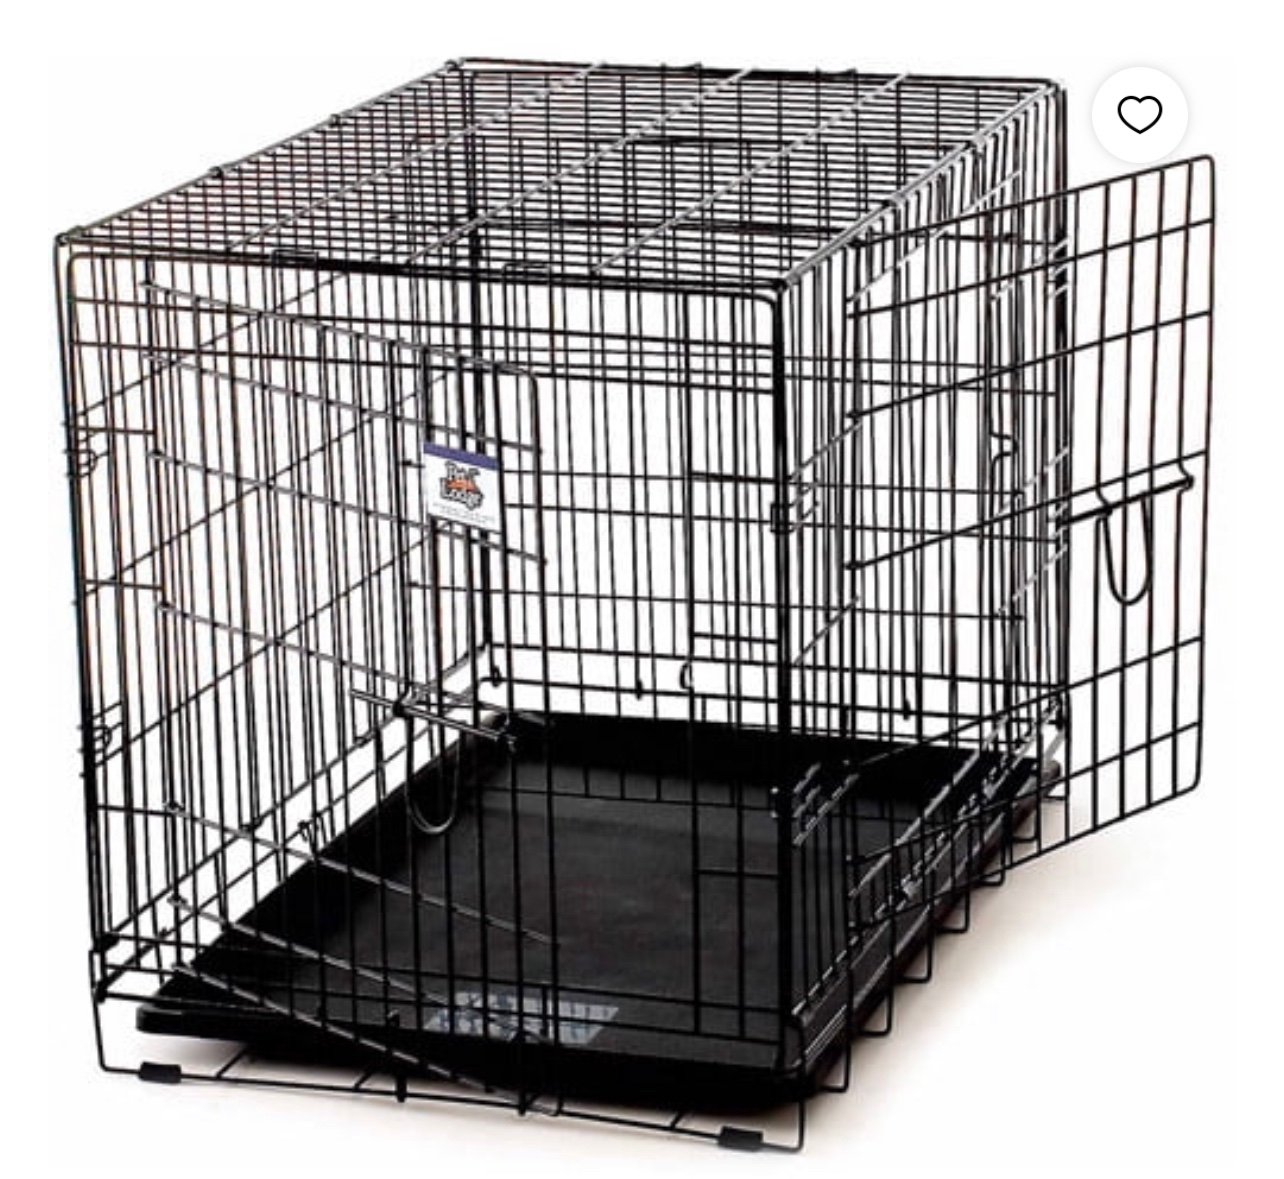 Dog crate and puppy plan pen 21JOsCau5